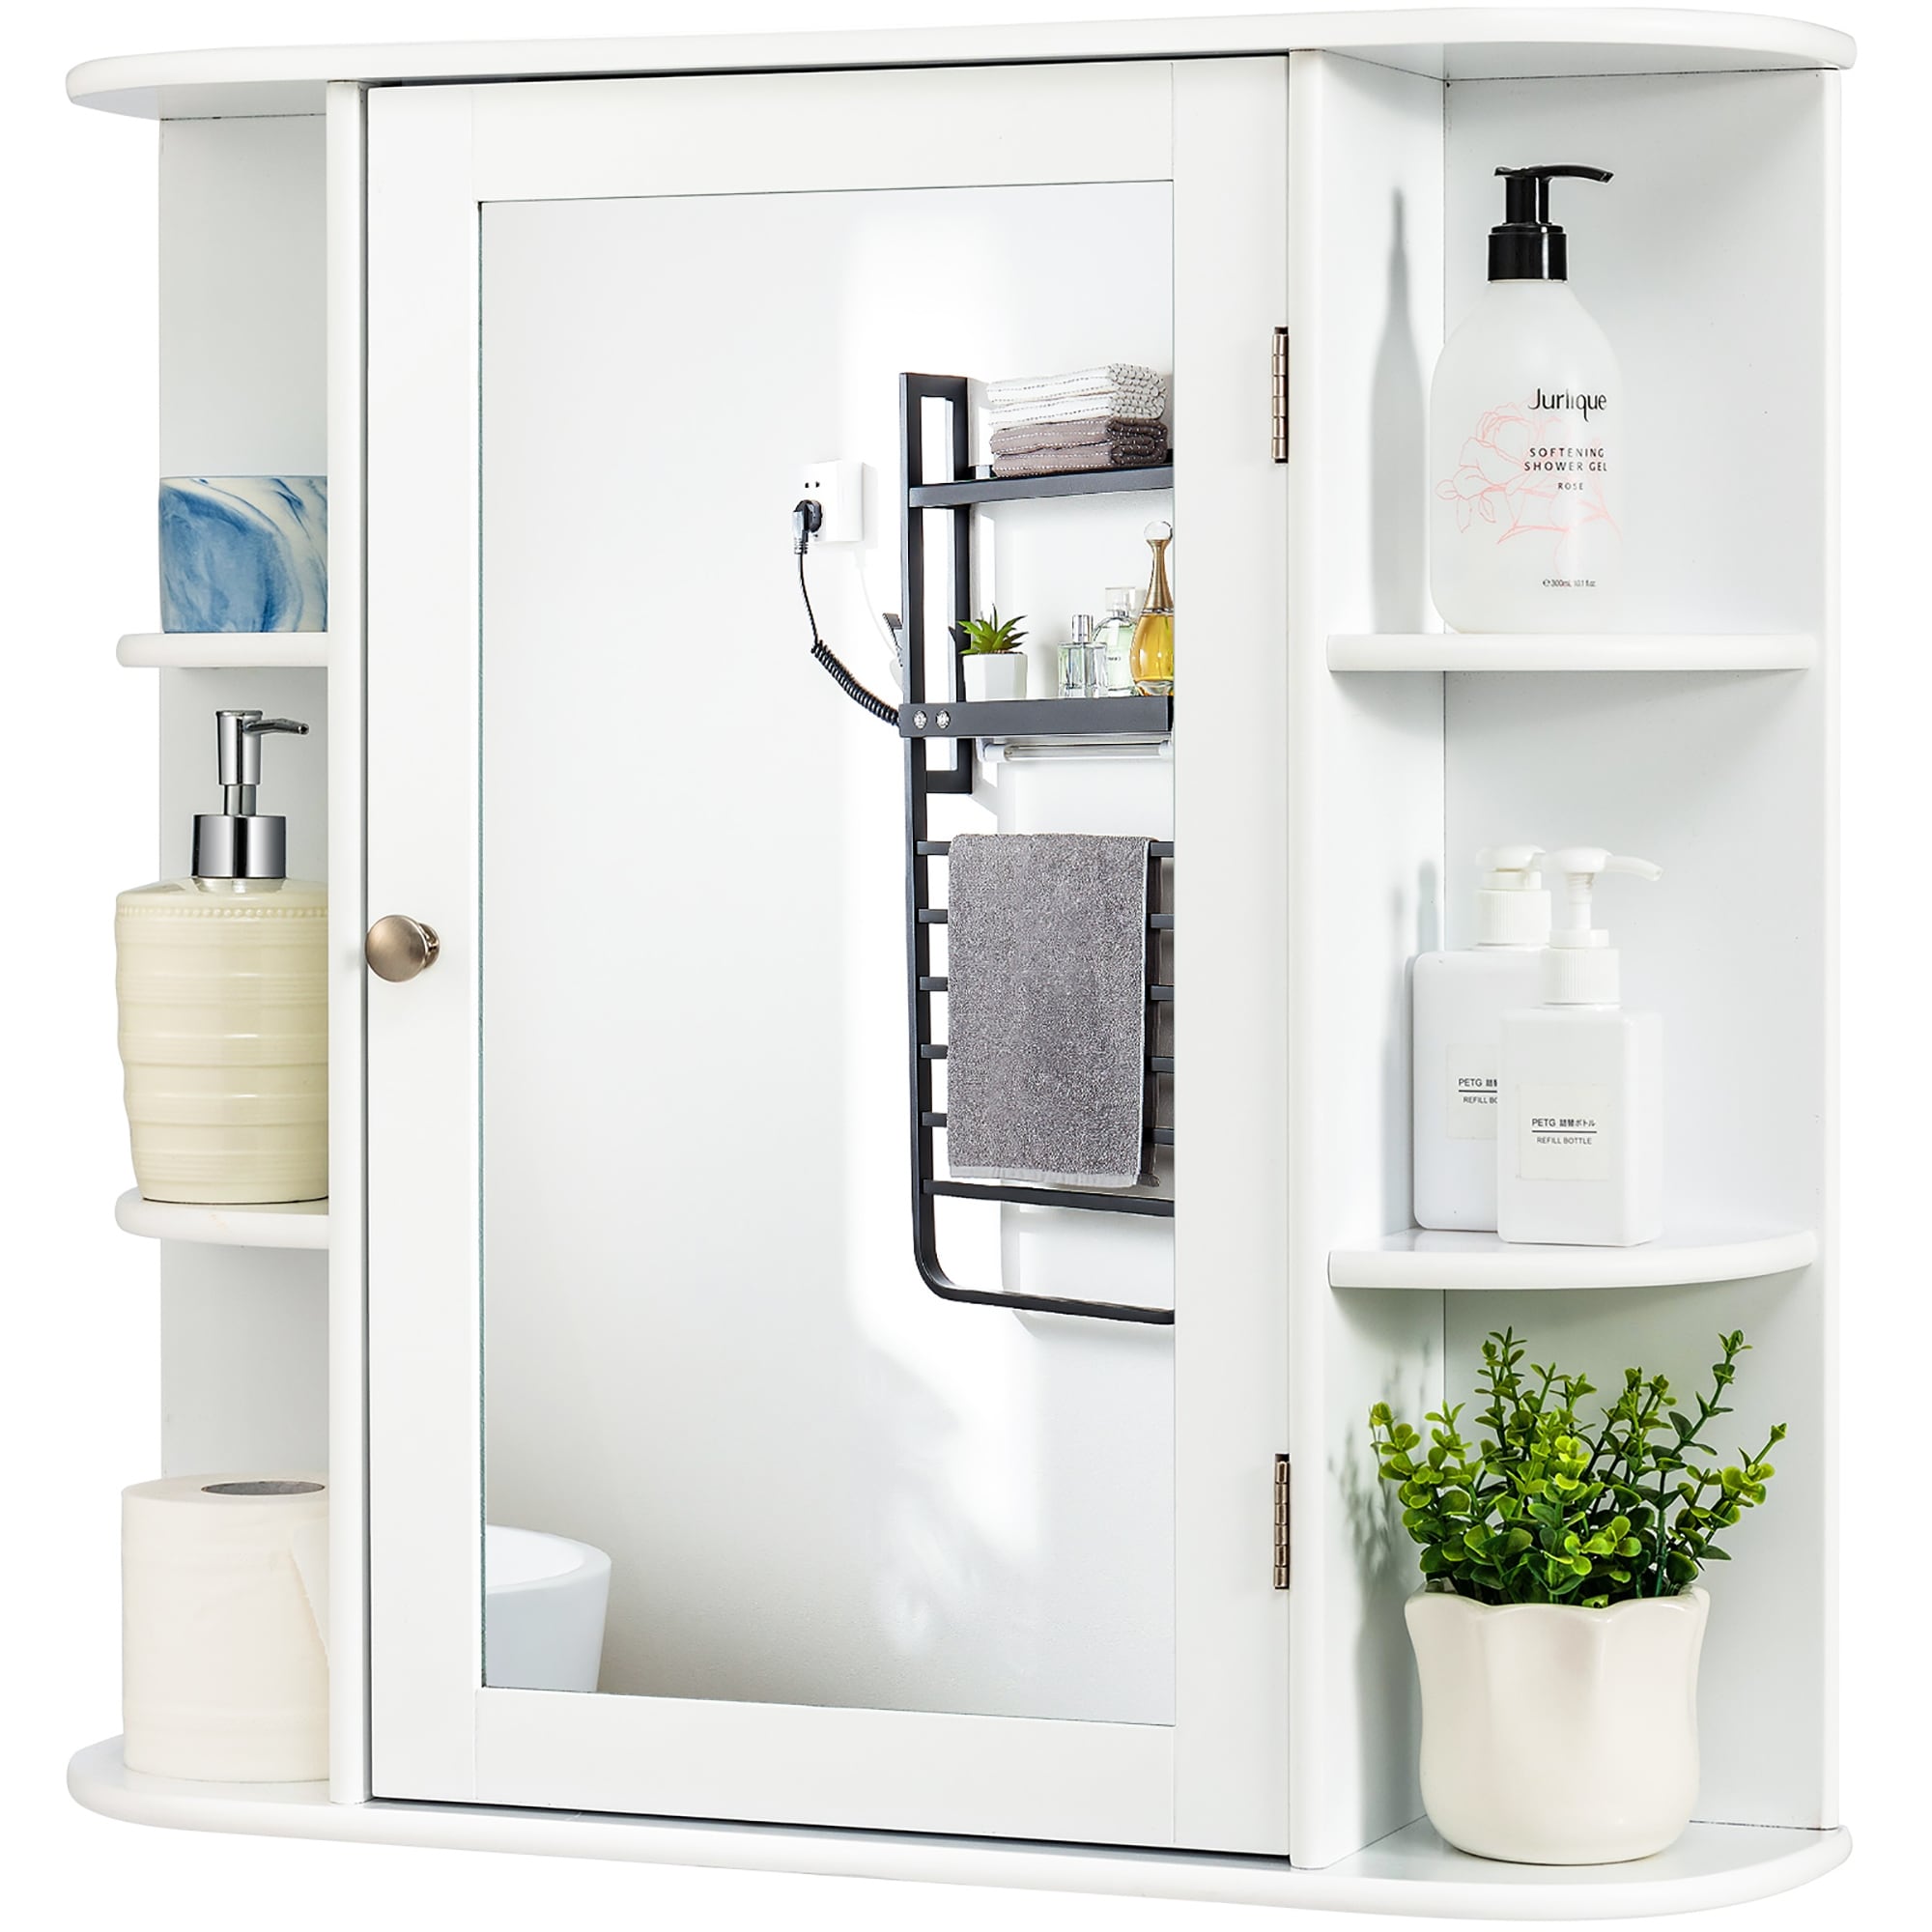 QUEEN ROSE Shower Caddy Shelves, Bathroom Shower Storage Shower